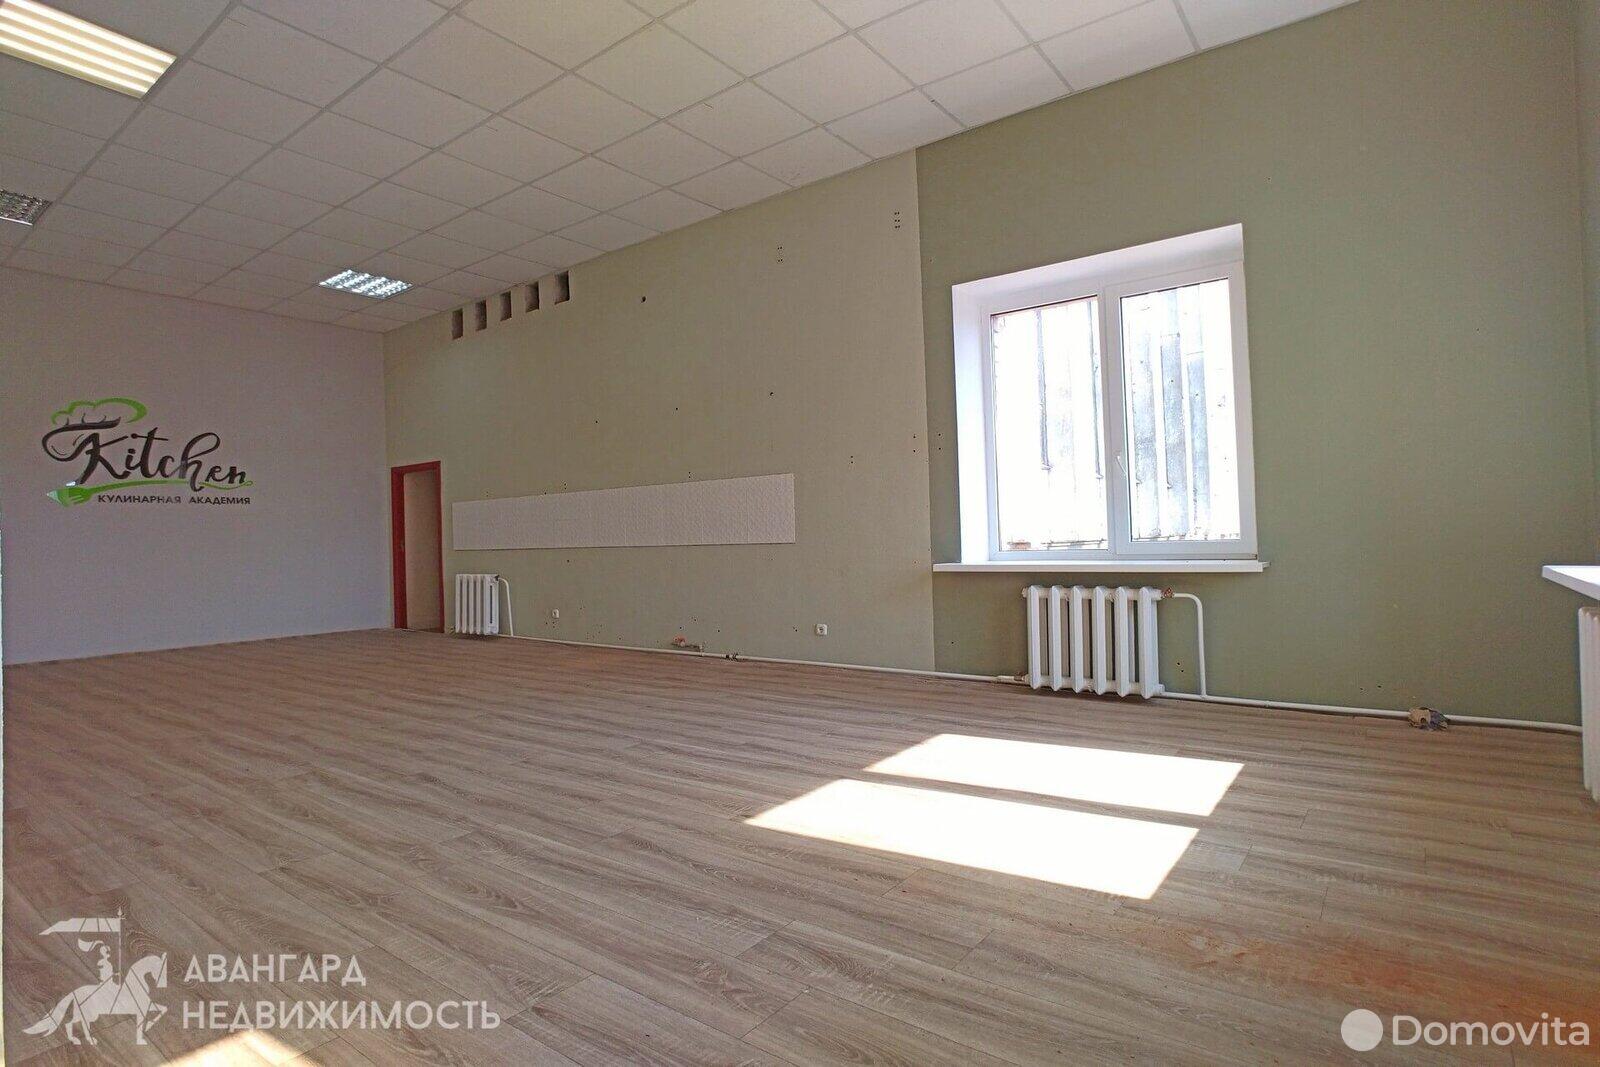 Снять офис на ул. Гусовского, д. 2/А в Минске, 288BYN, код 10496 - фото 2